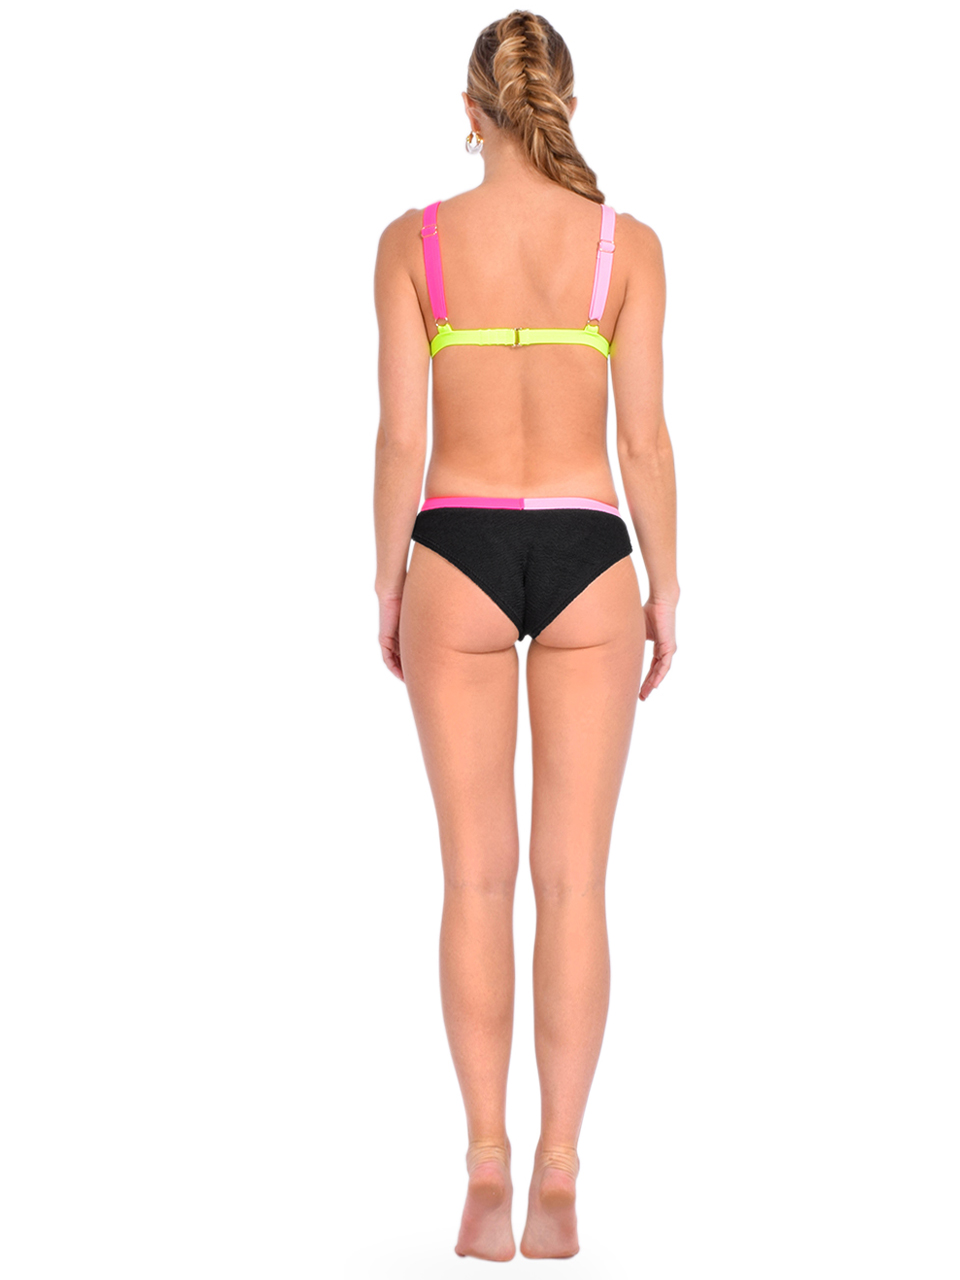 LOVE & BIKINIS Mykonos Bikini Set in Black Back View 